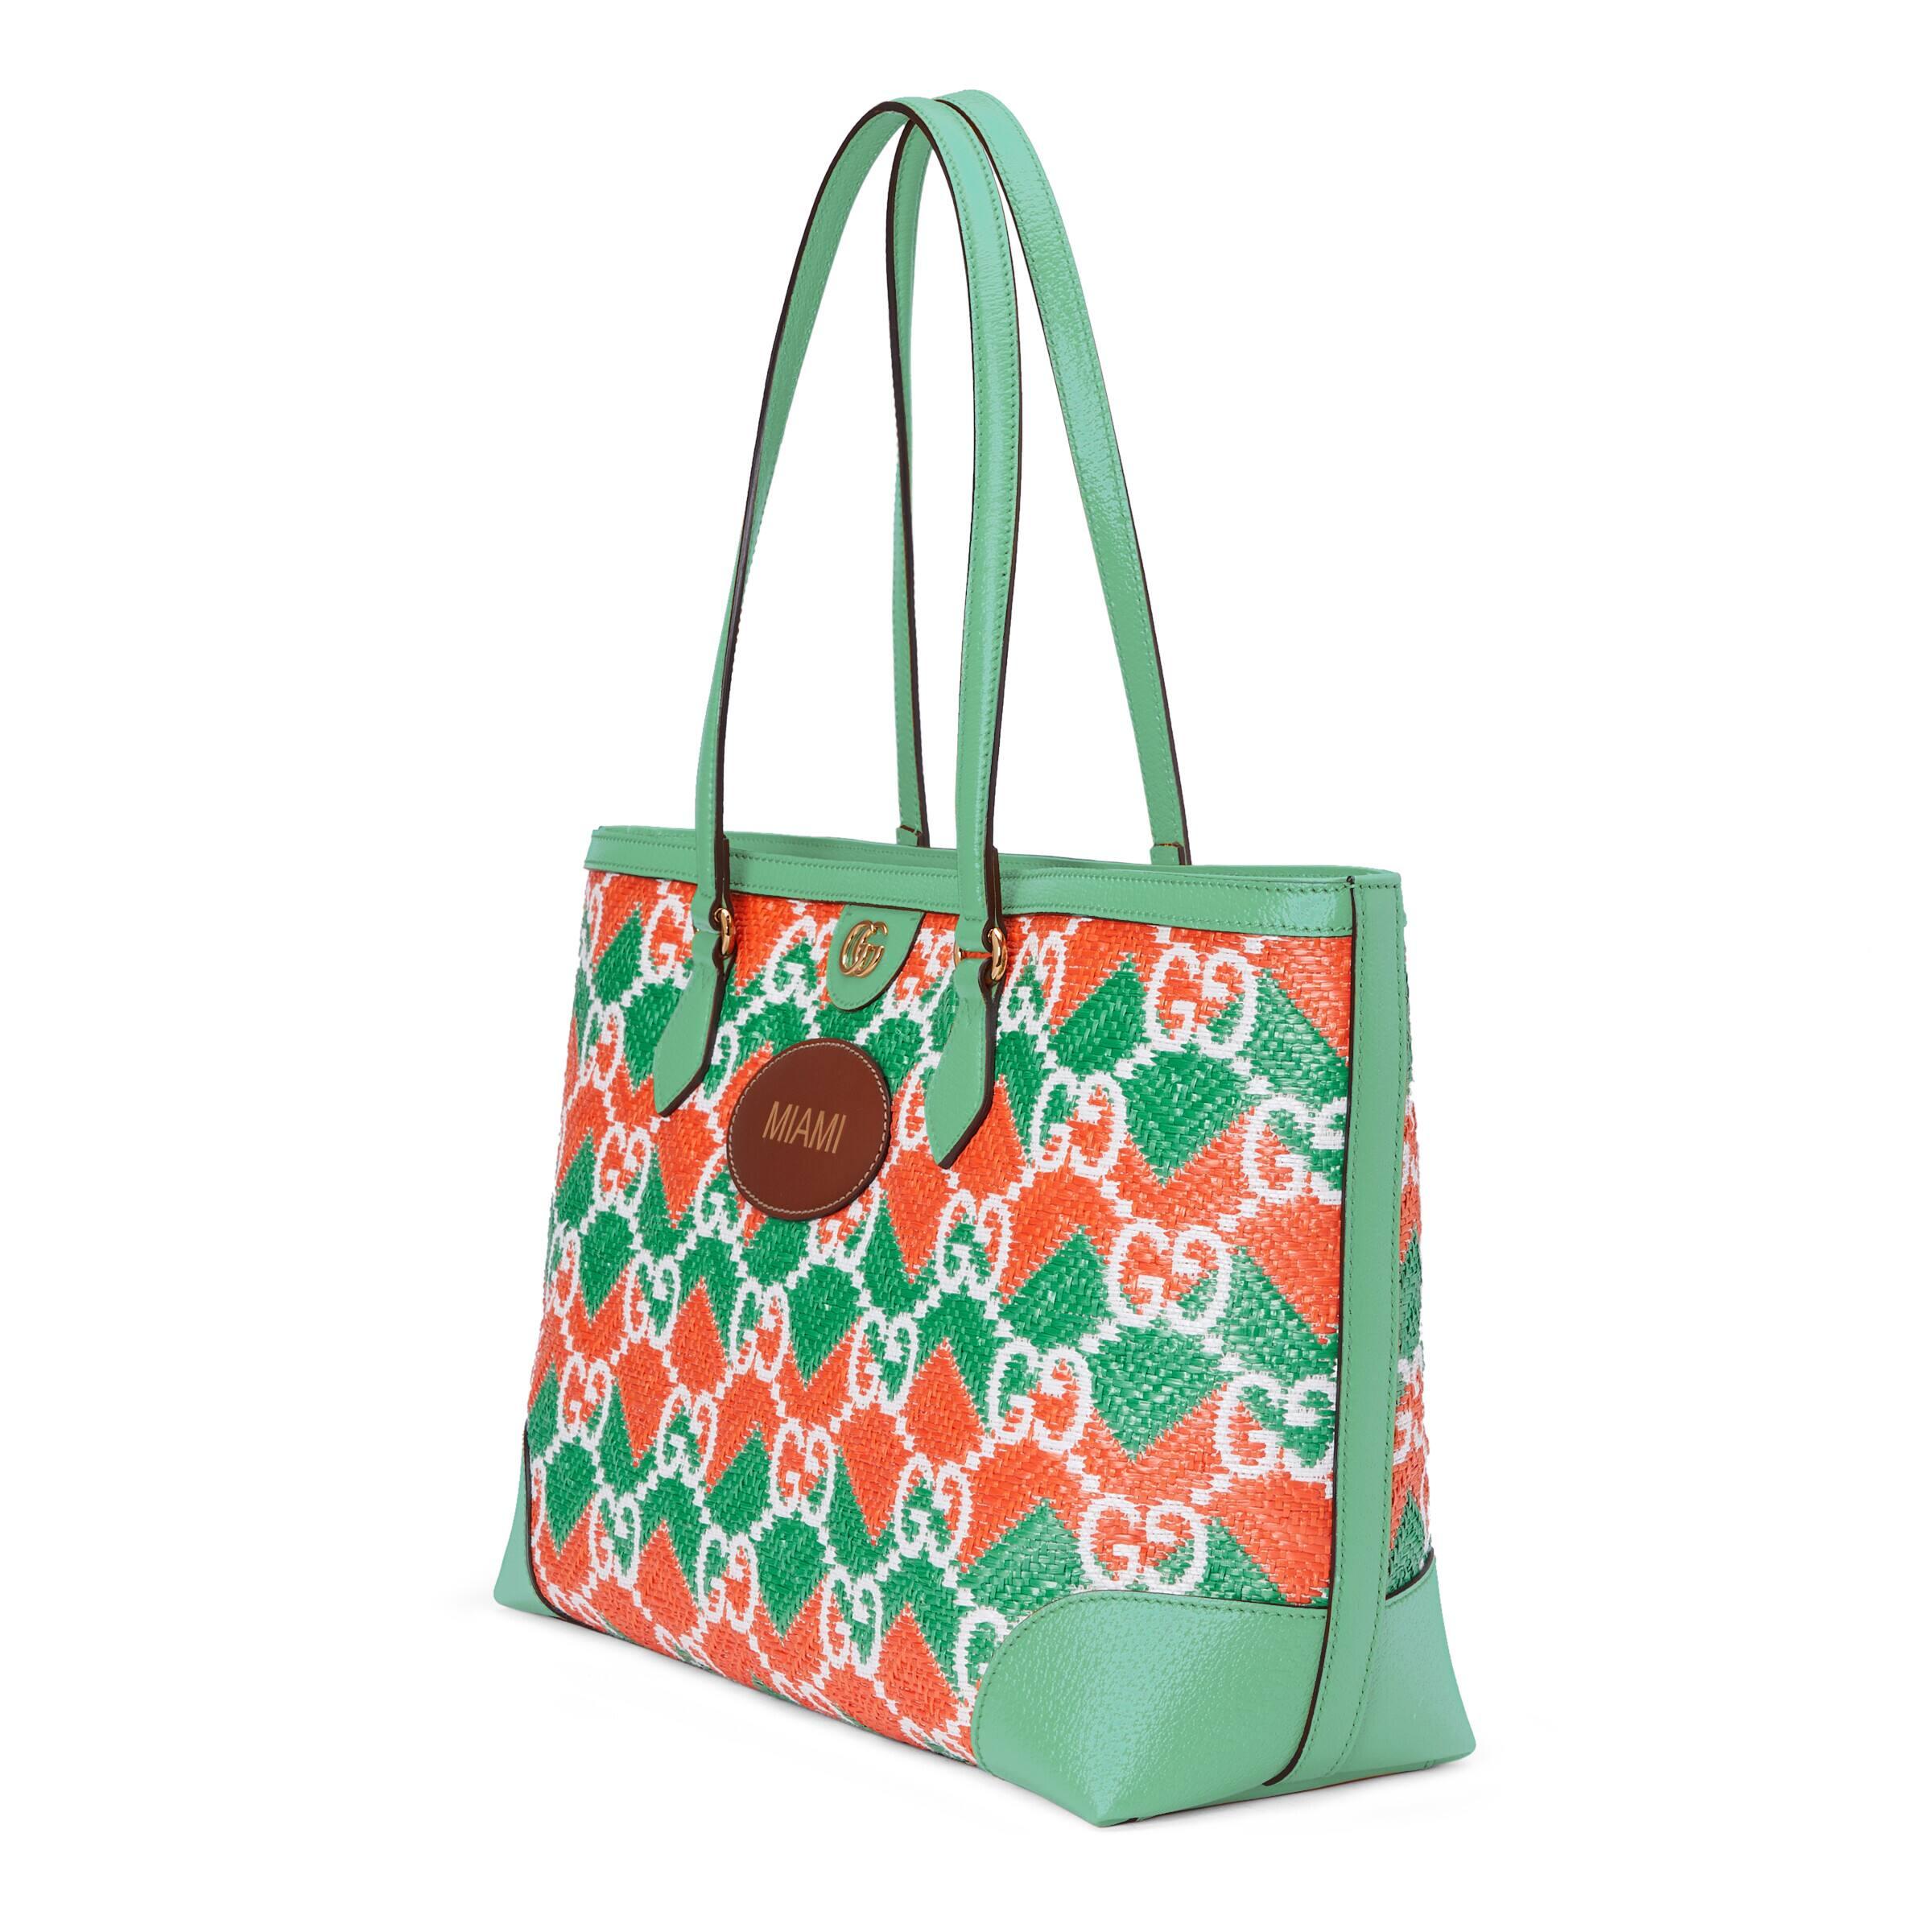 Gucci Sukey Tote Bag - Orange Totes, Handbags - GUC1068801